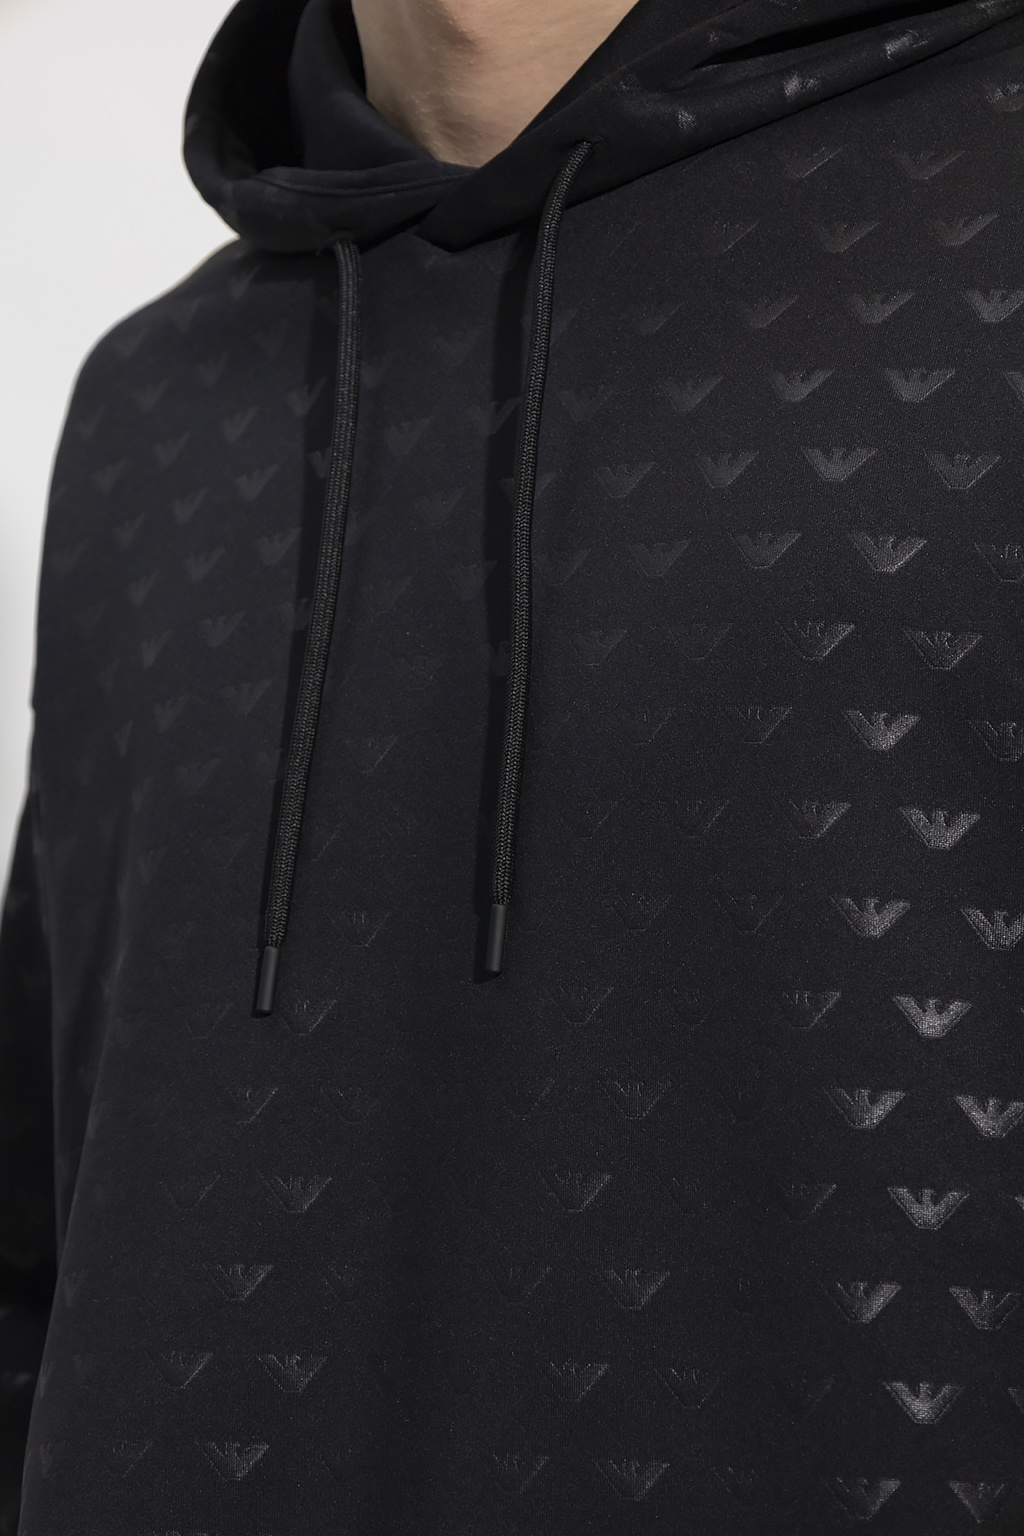 Louis Vuitton Eagle Logo Fashion Luxury Brand Hoodie For Men Women